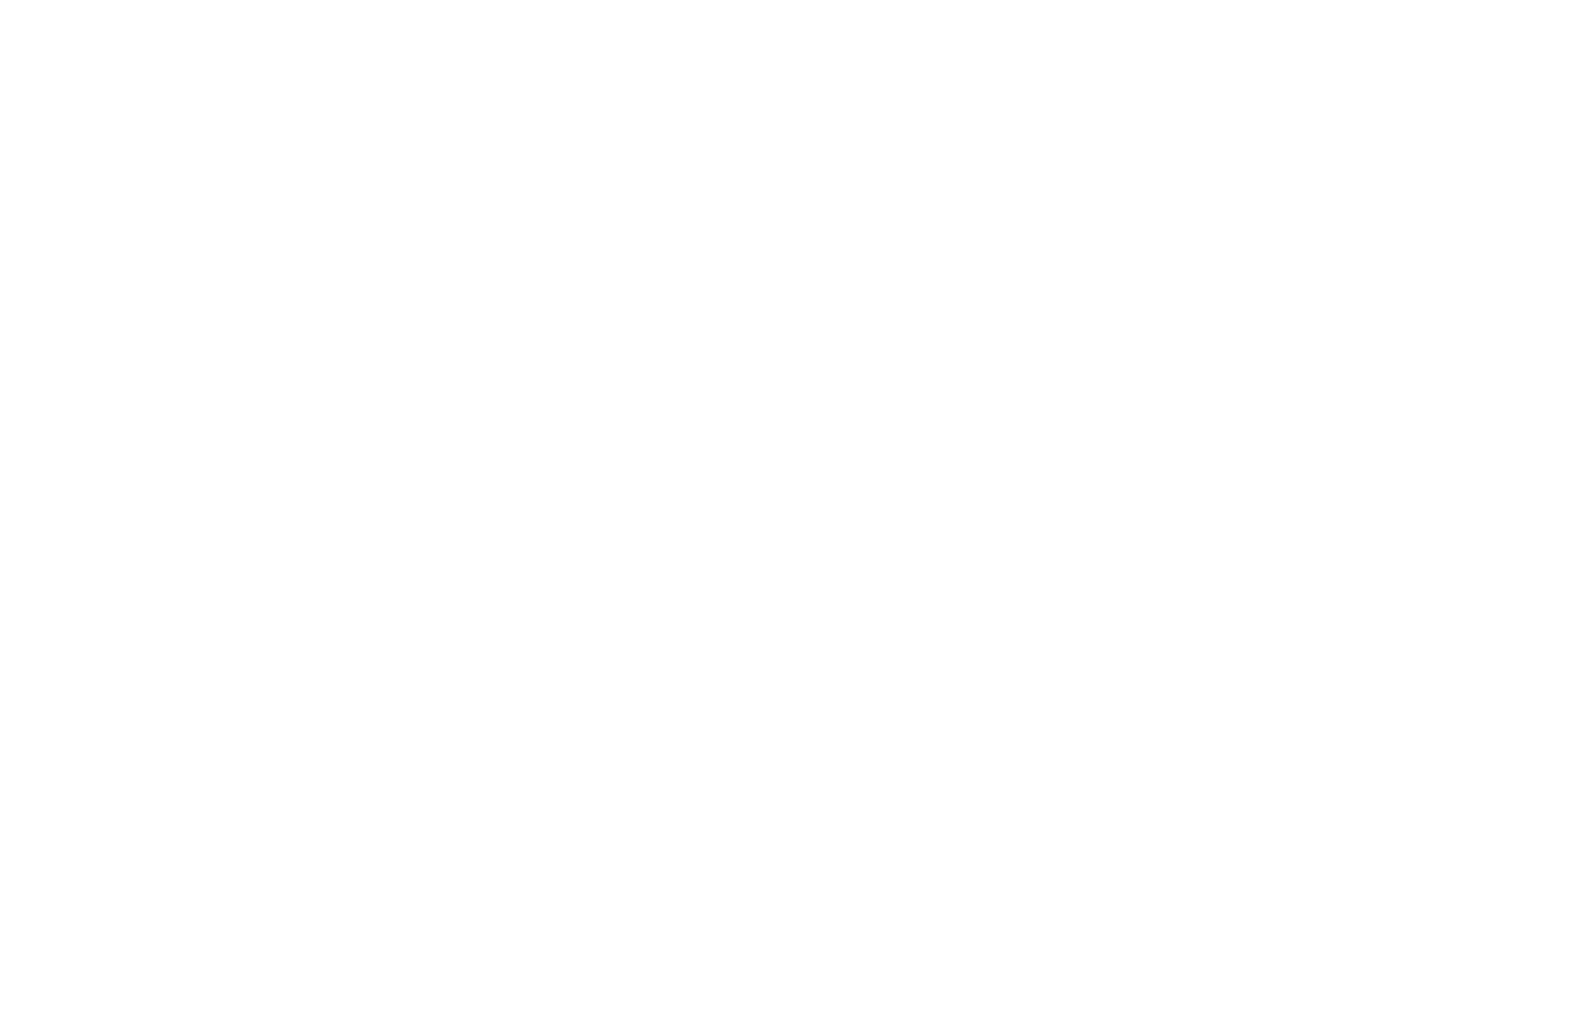 Development Capital Fund